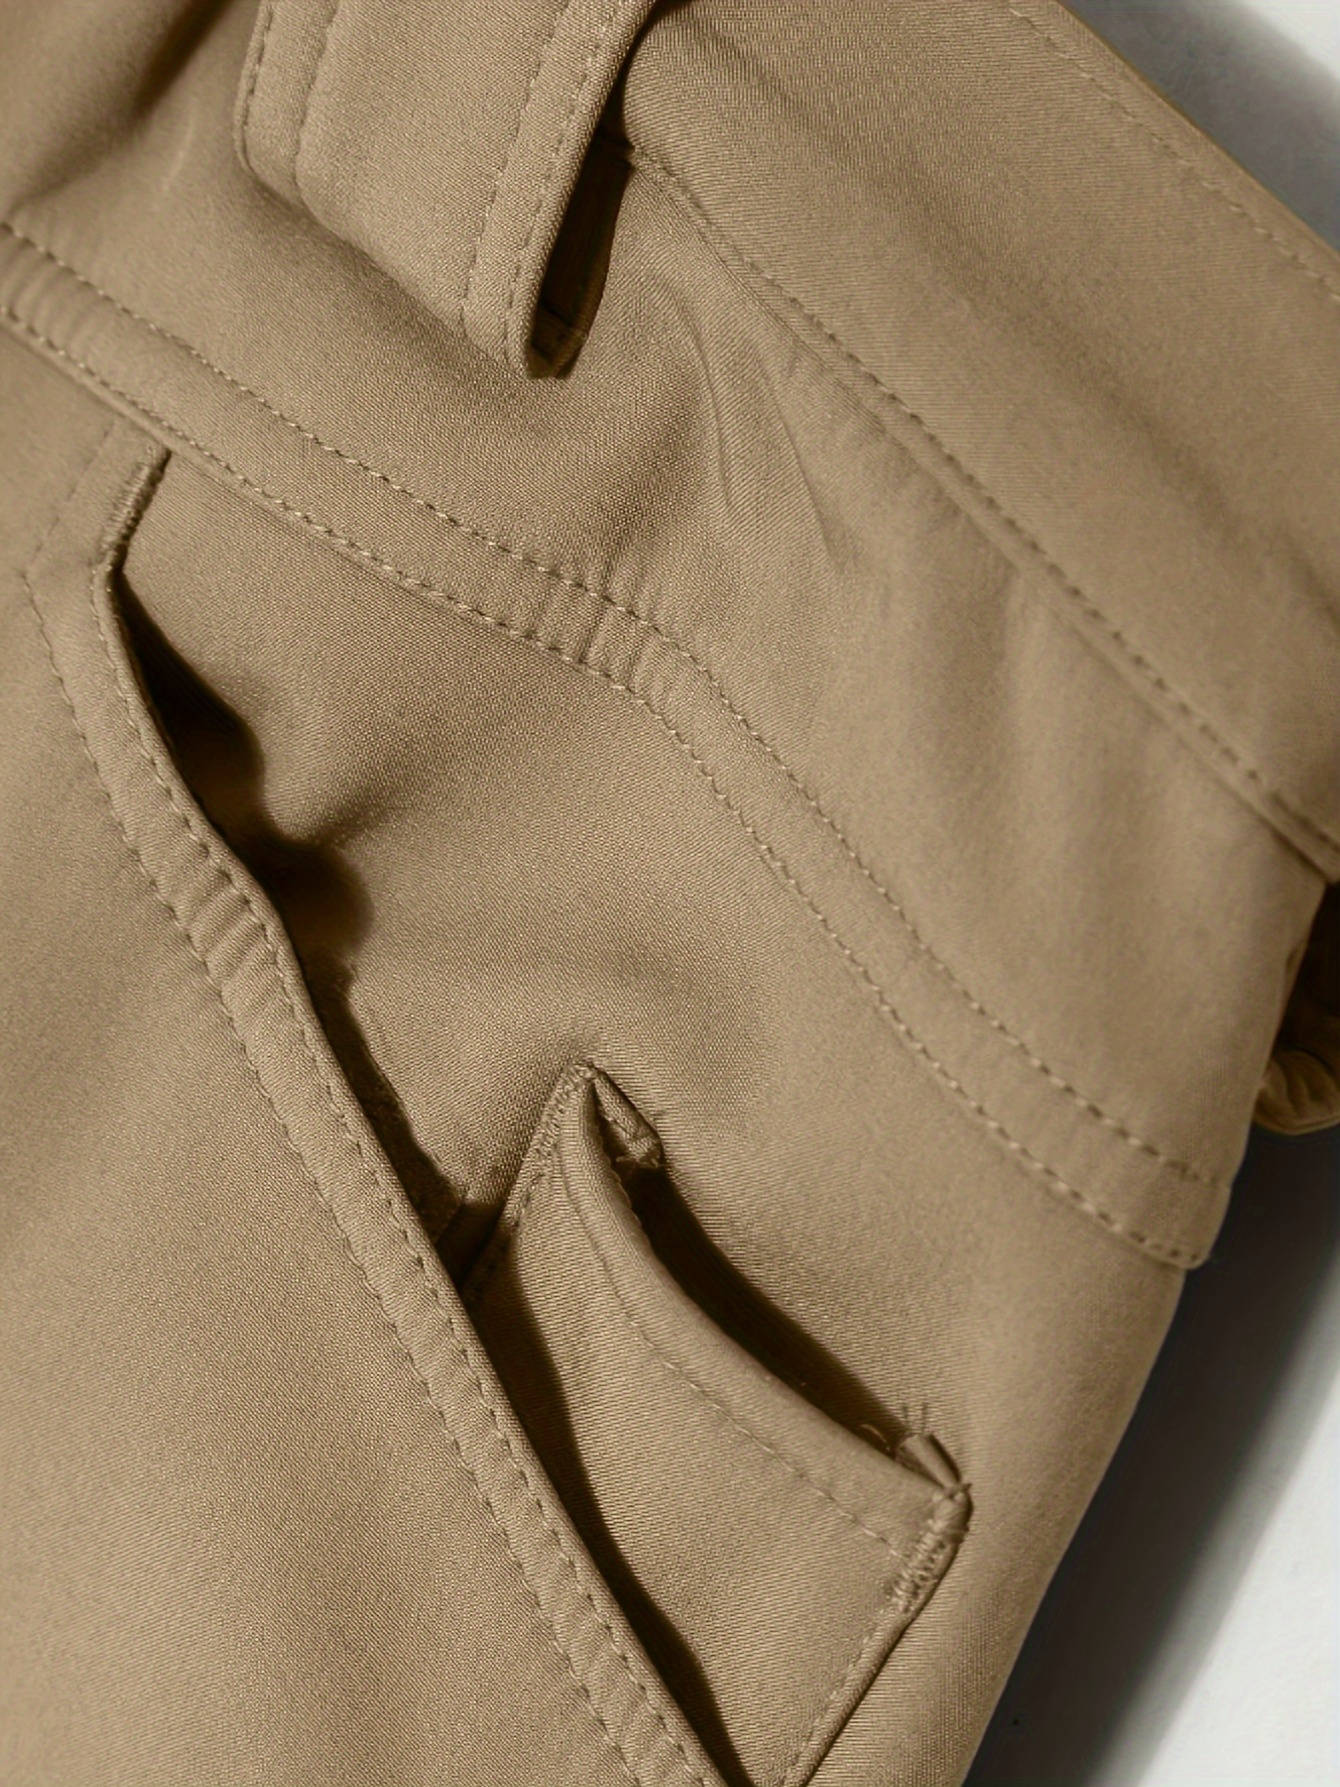 Men 6 Pockets Fleece Warm Cargo Pants Work Casual Winter Pants Military  Trousers